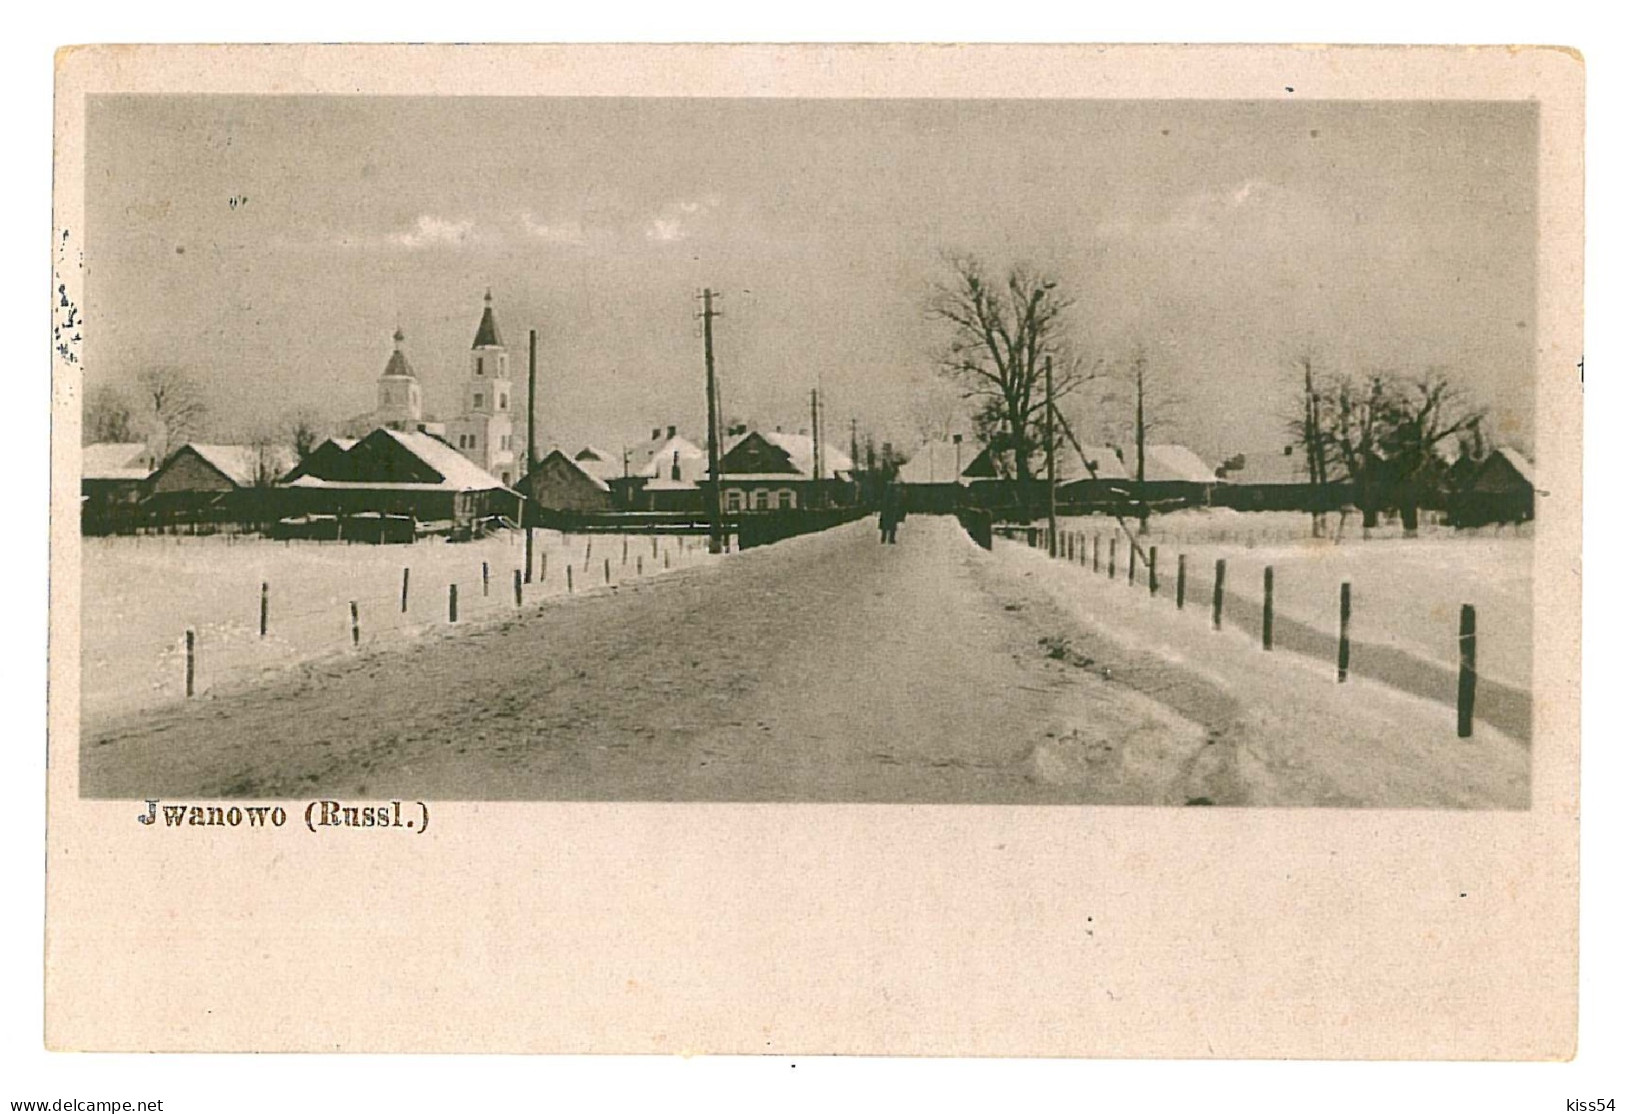 POL 4 - 9488 JANOWO, Poland, Winter - Old Postcard, CENSOR - Used - 1917 - Polen